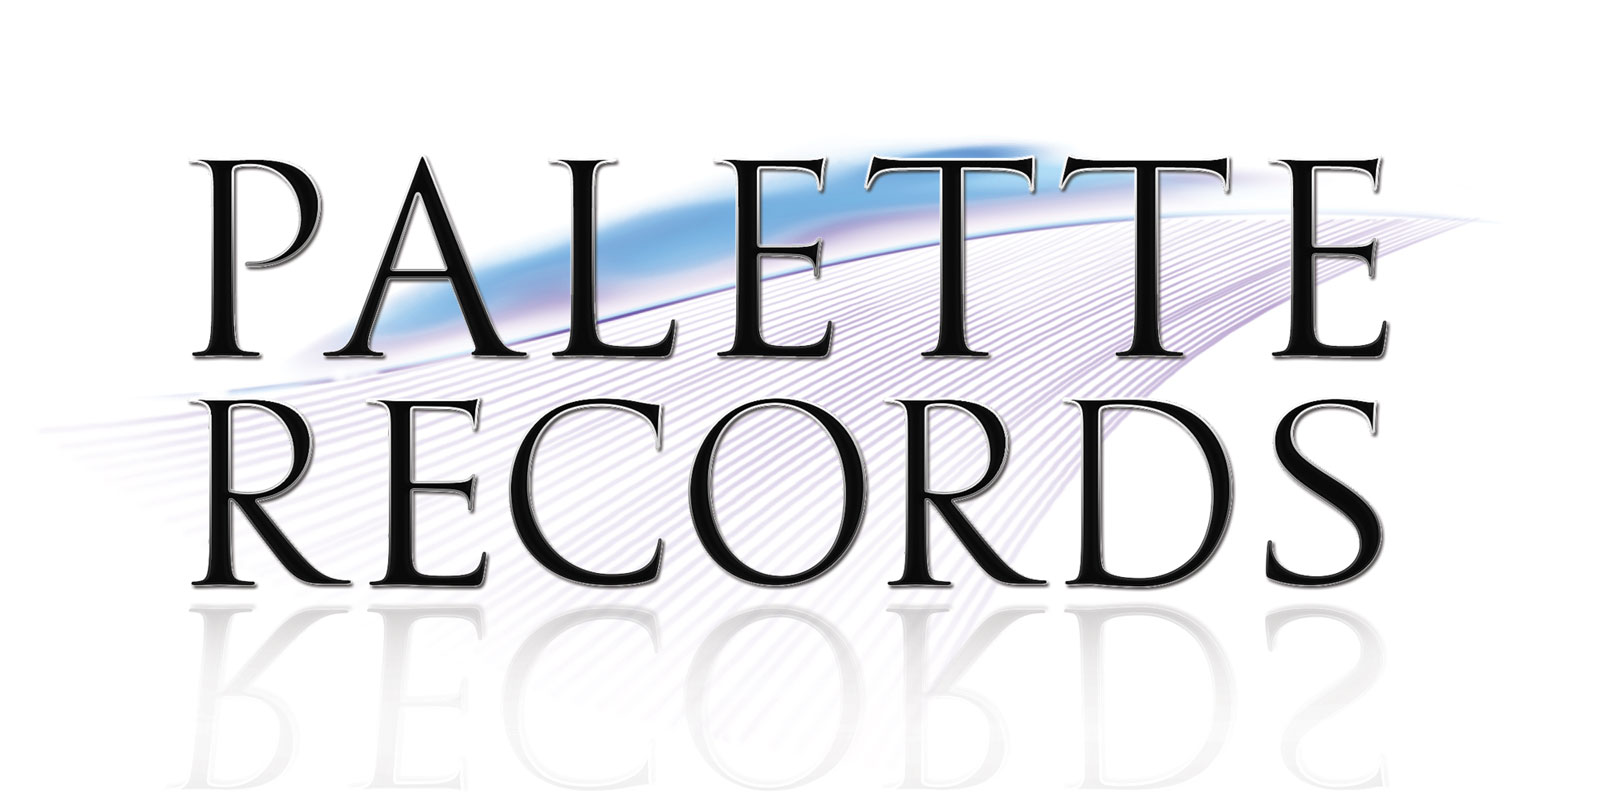 Palette Records